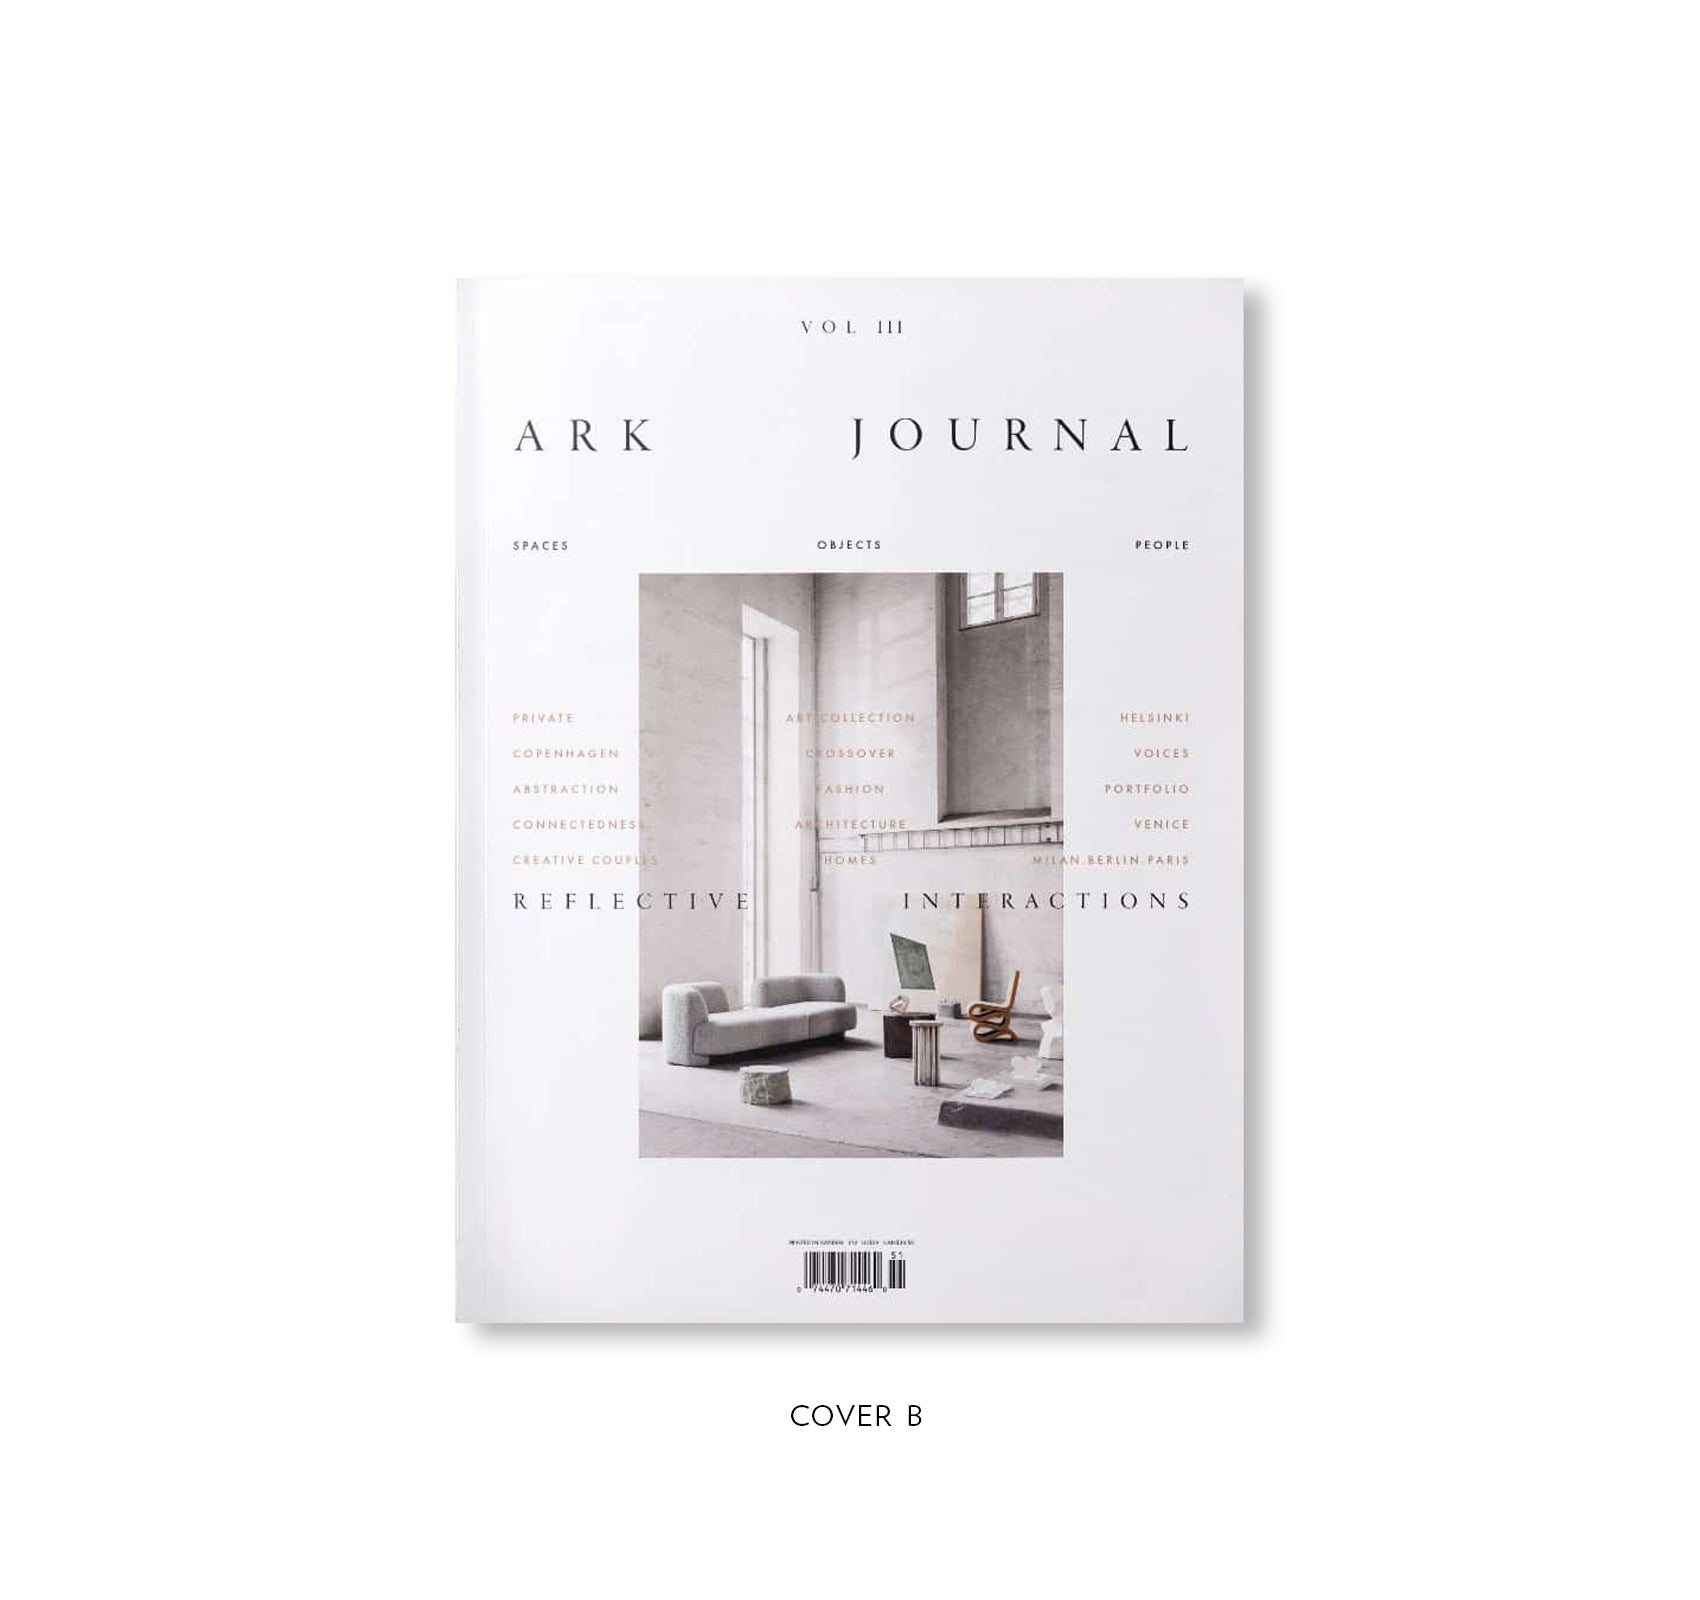 ARK JOURNAL VOLUME III SPRING/SUMMER 2020